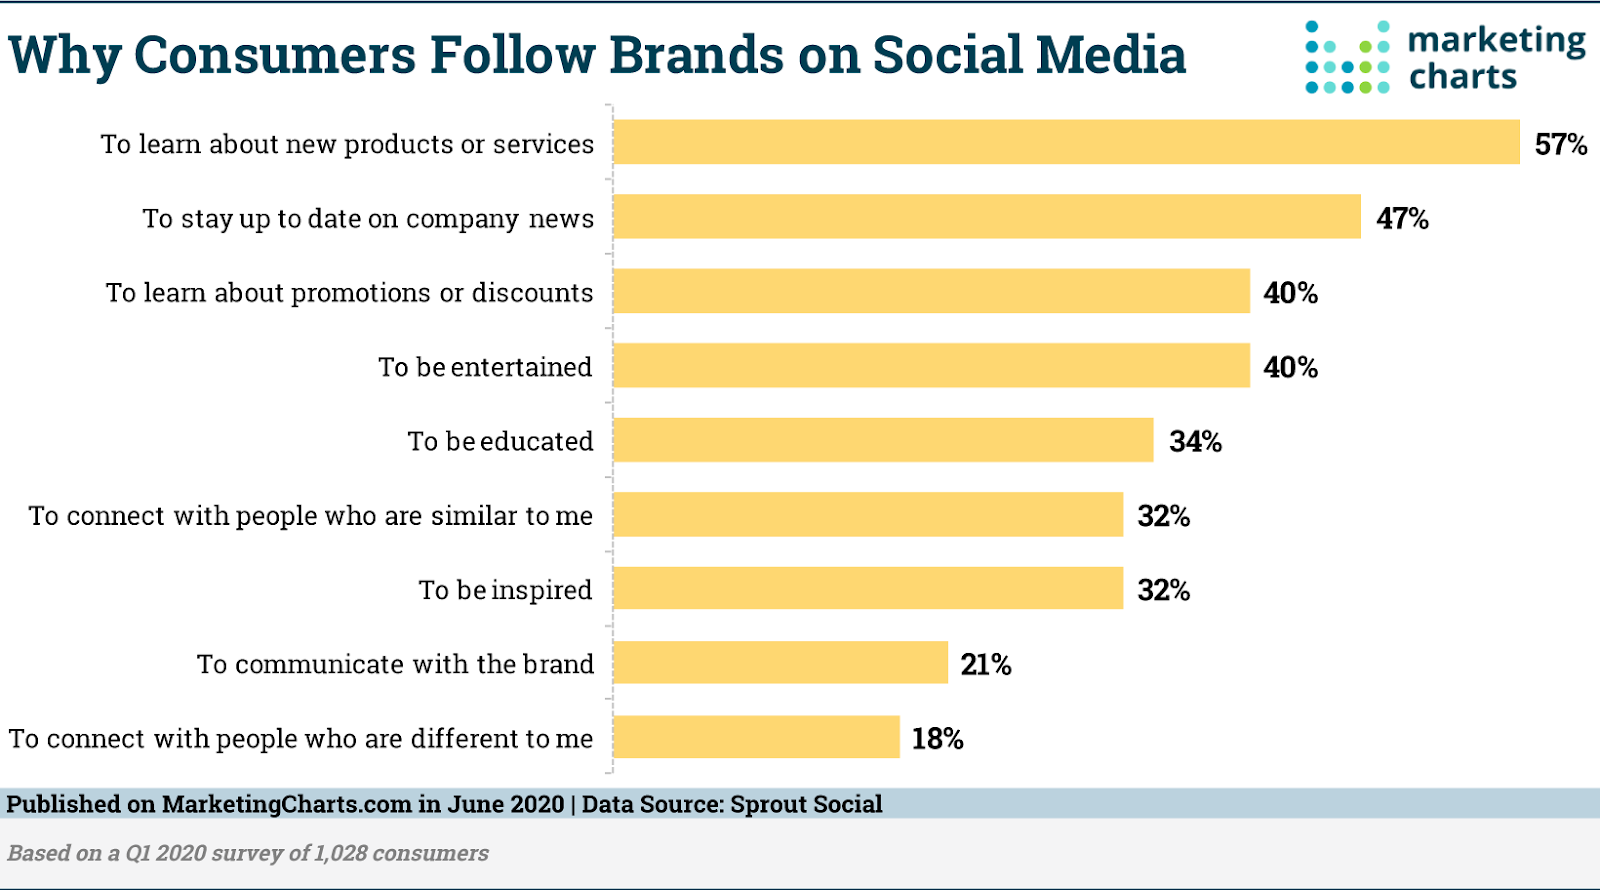 Top reasons consumers follow brands on social media.